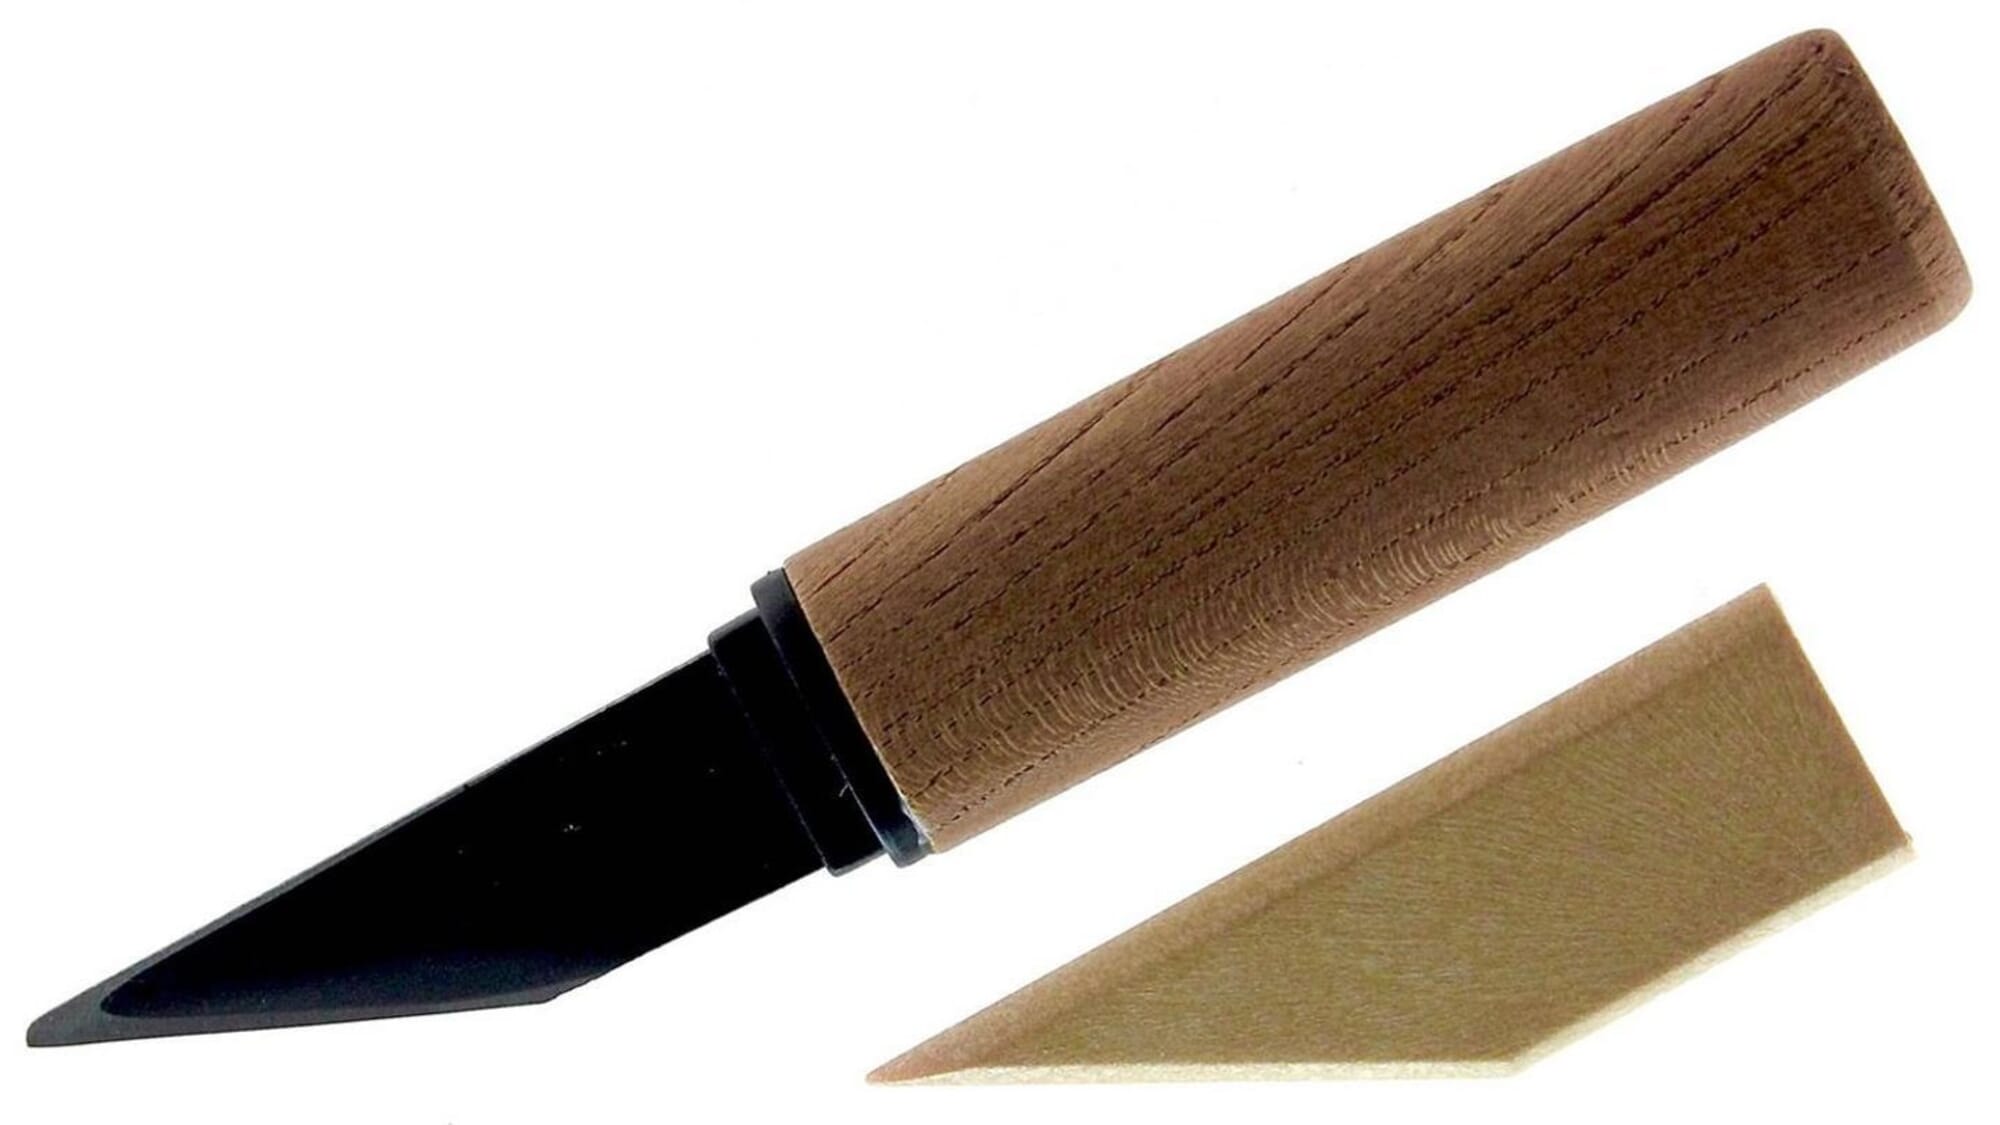 Woodworking Tool 175mm Small Japanese Kiridashi Kogatana Utility Knife, with Blade Sheath, for Wood Carving & Bamboo Craft